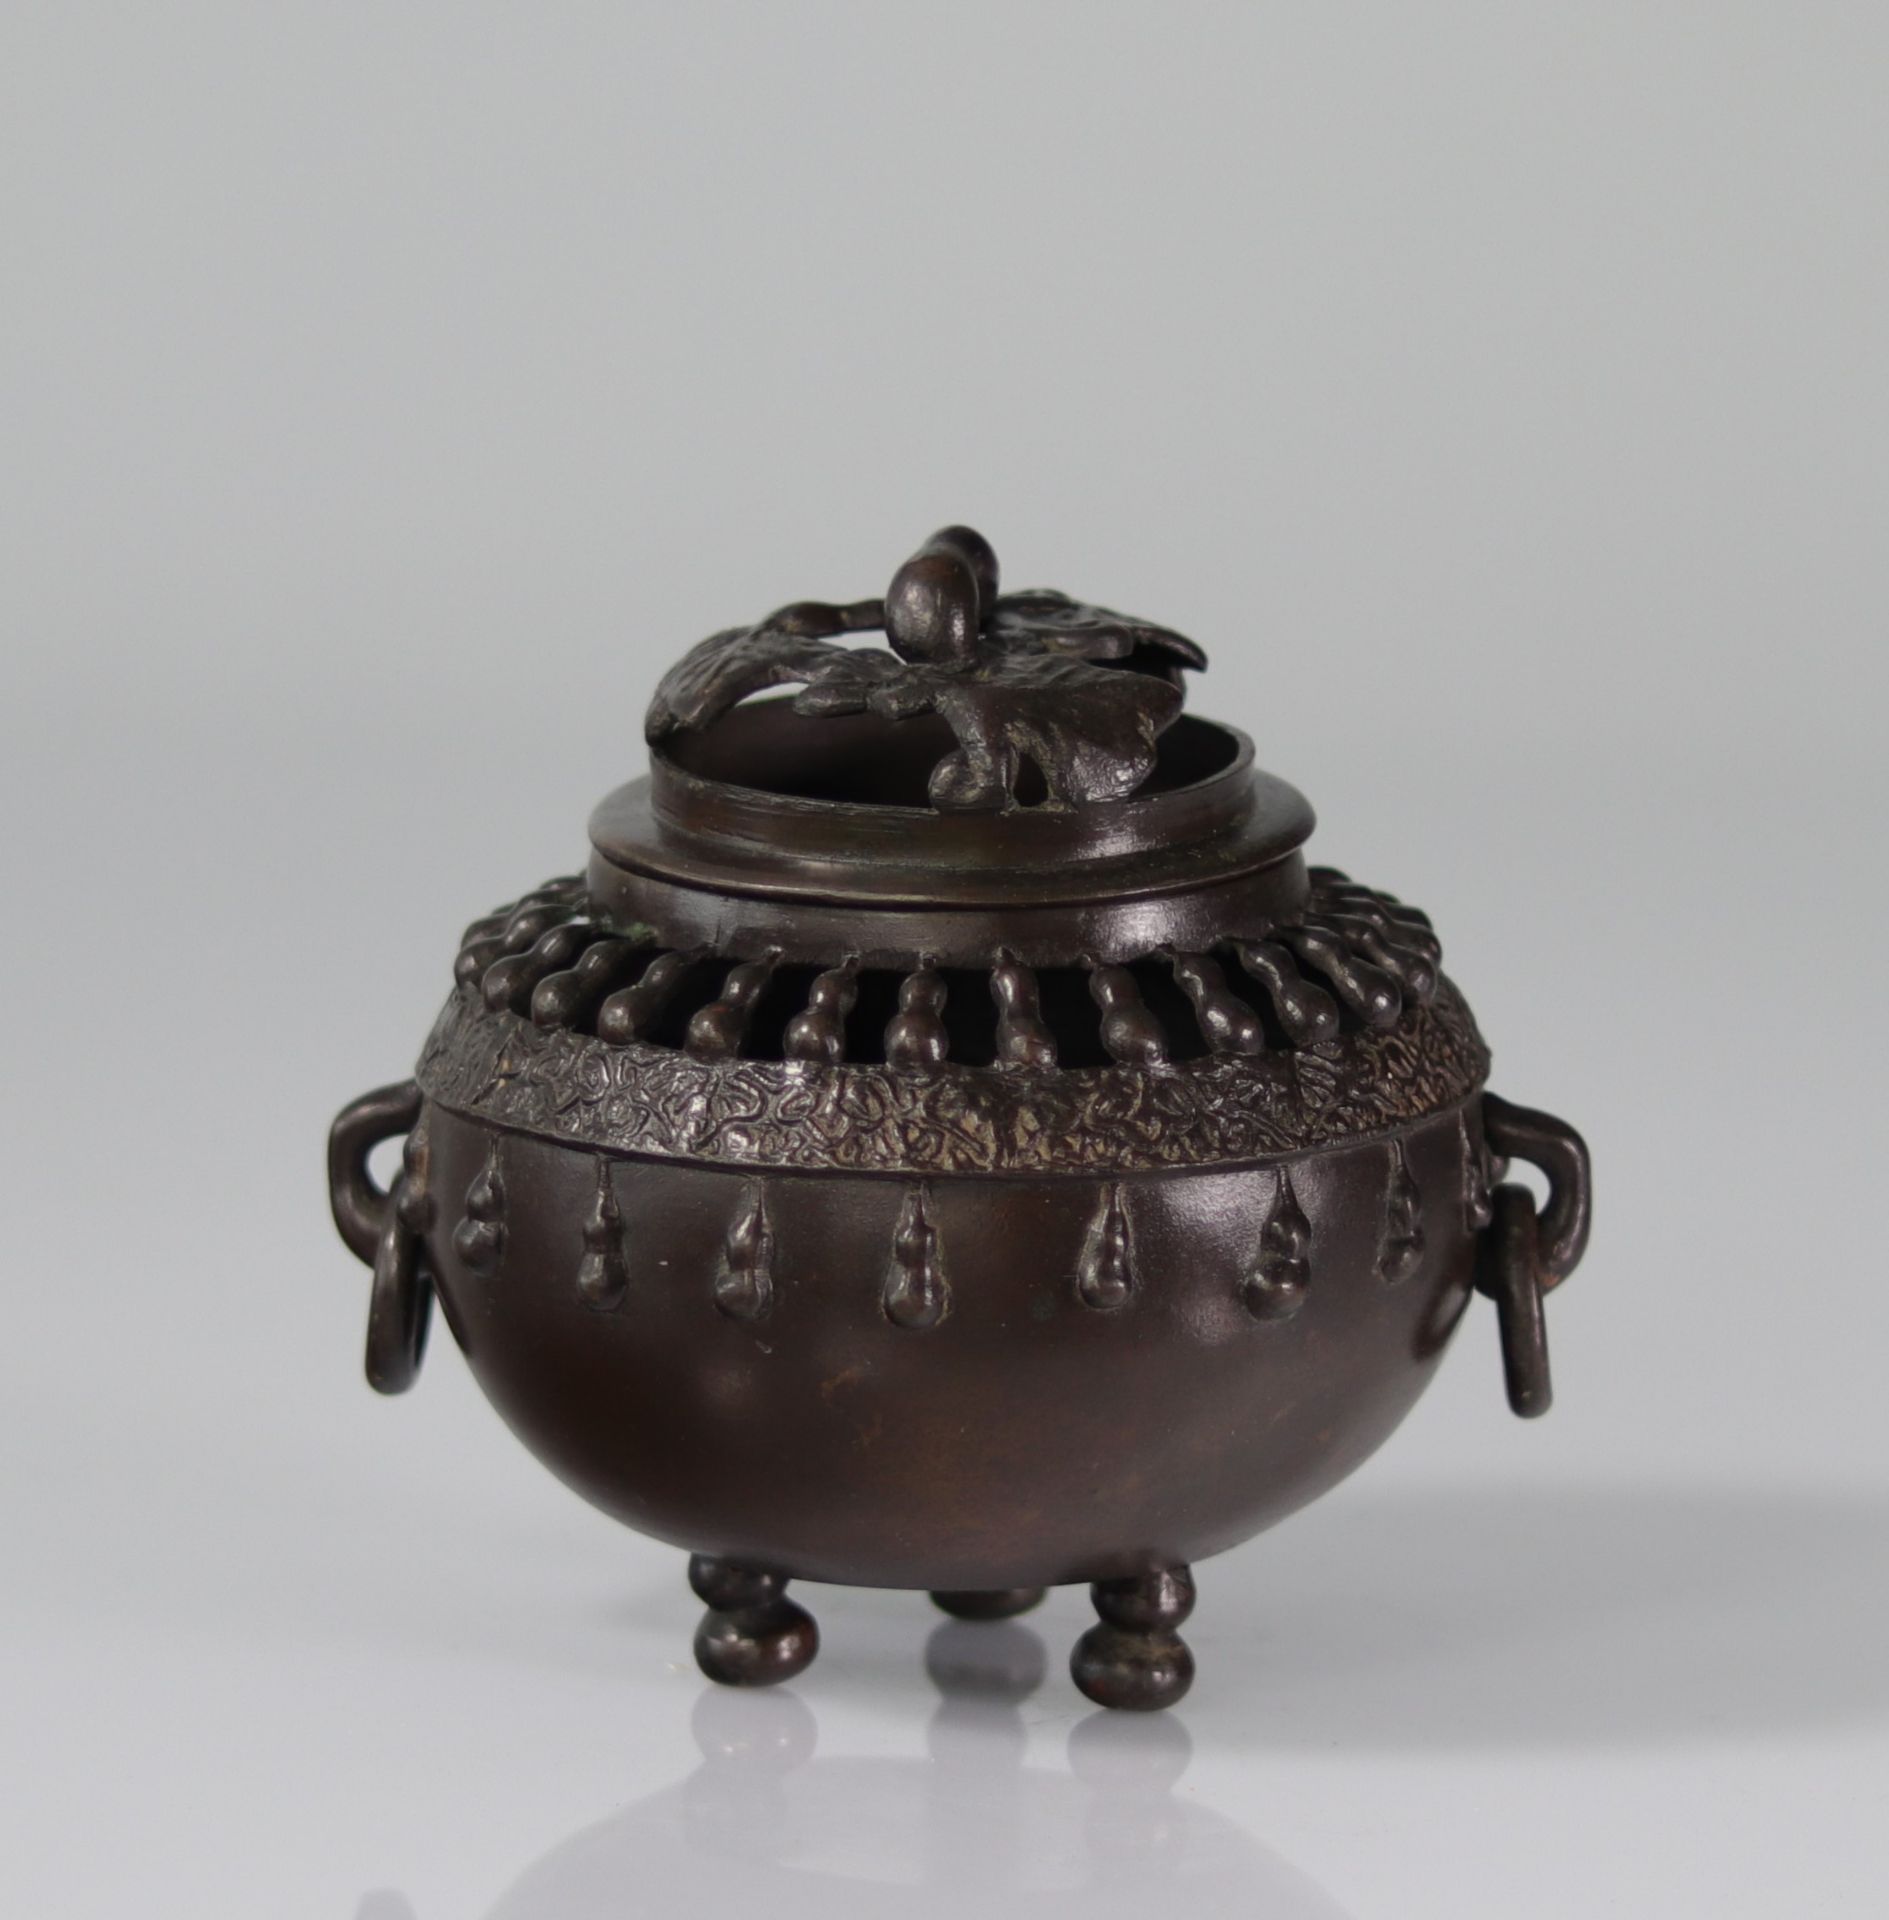 19th century Asian bronze perfume burner